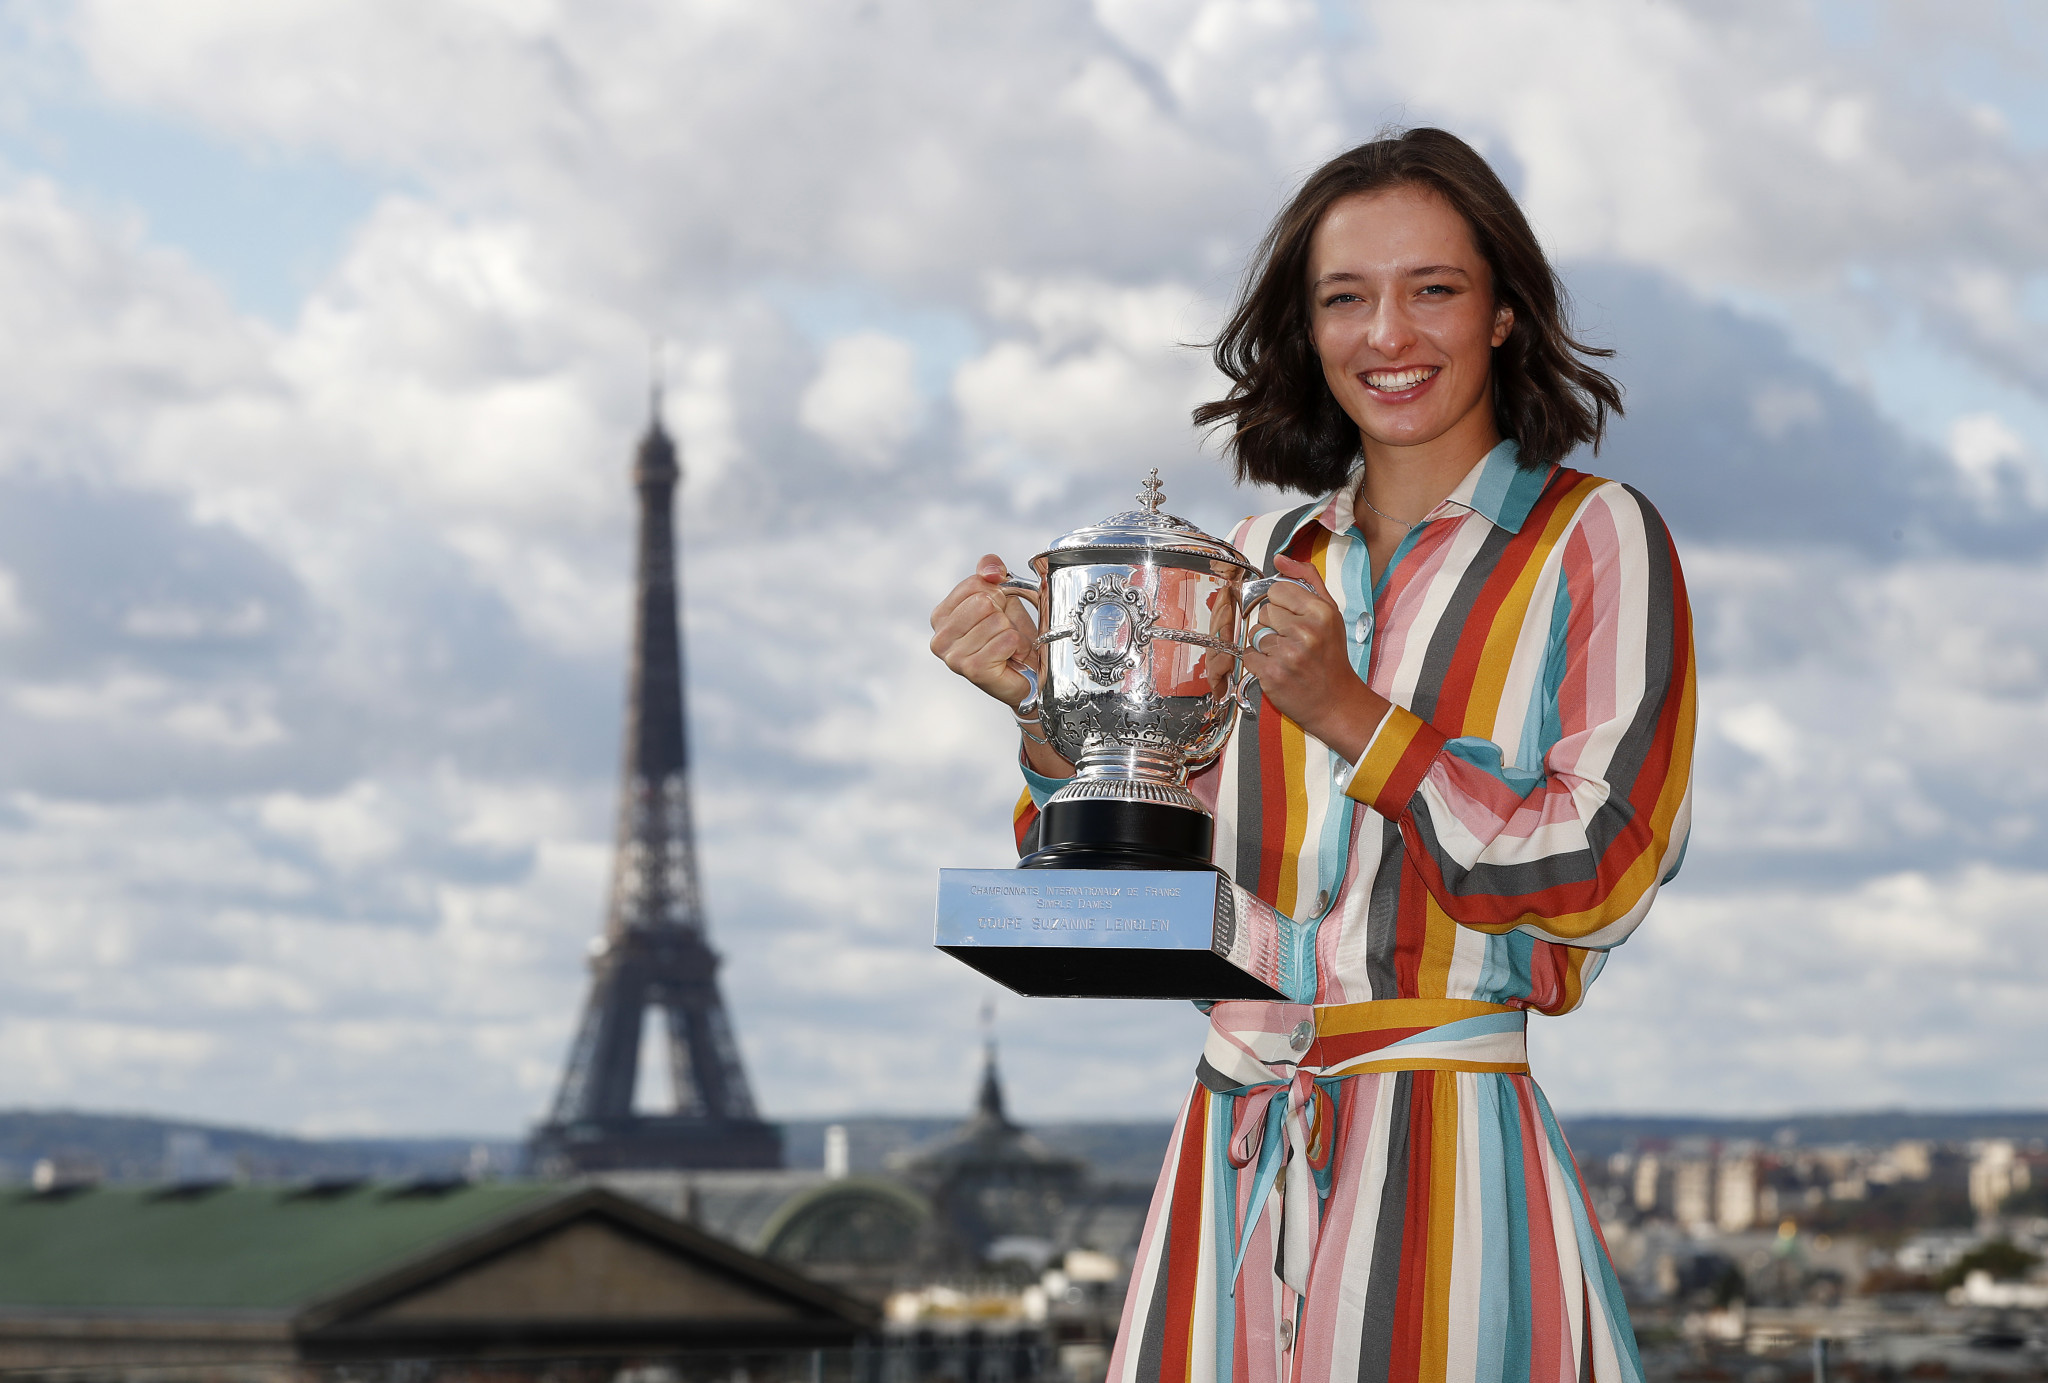 Świątek still "shocked" by French Open win